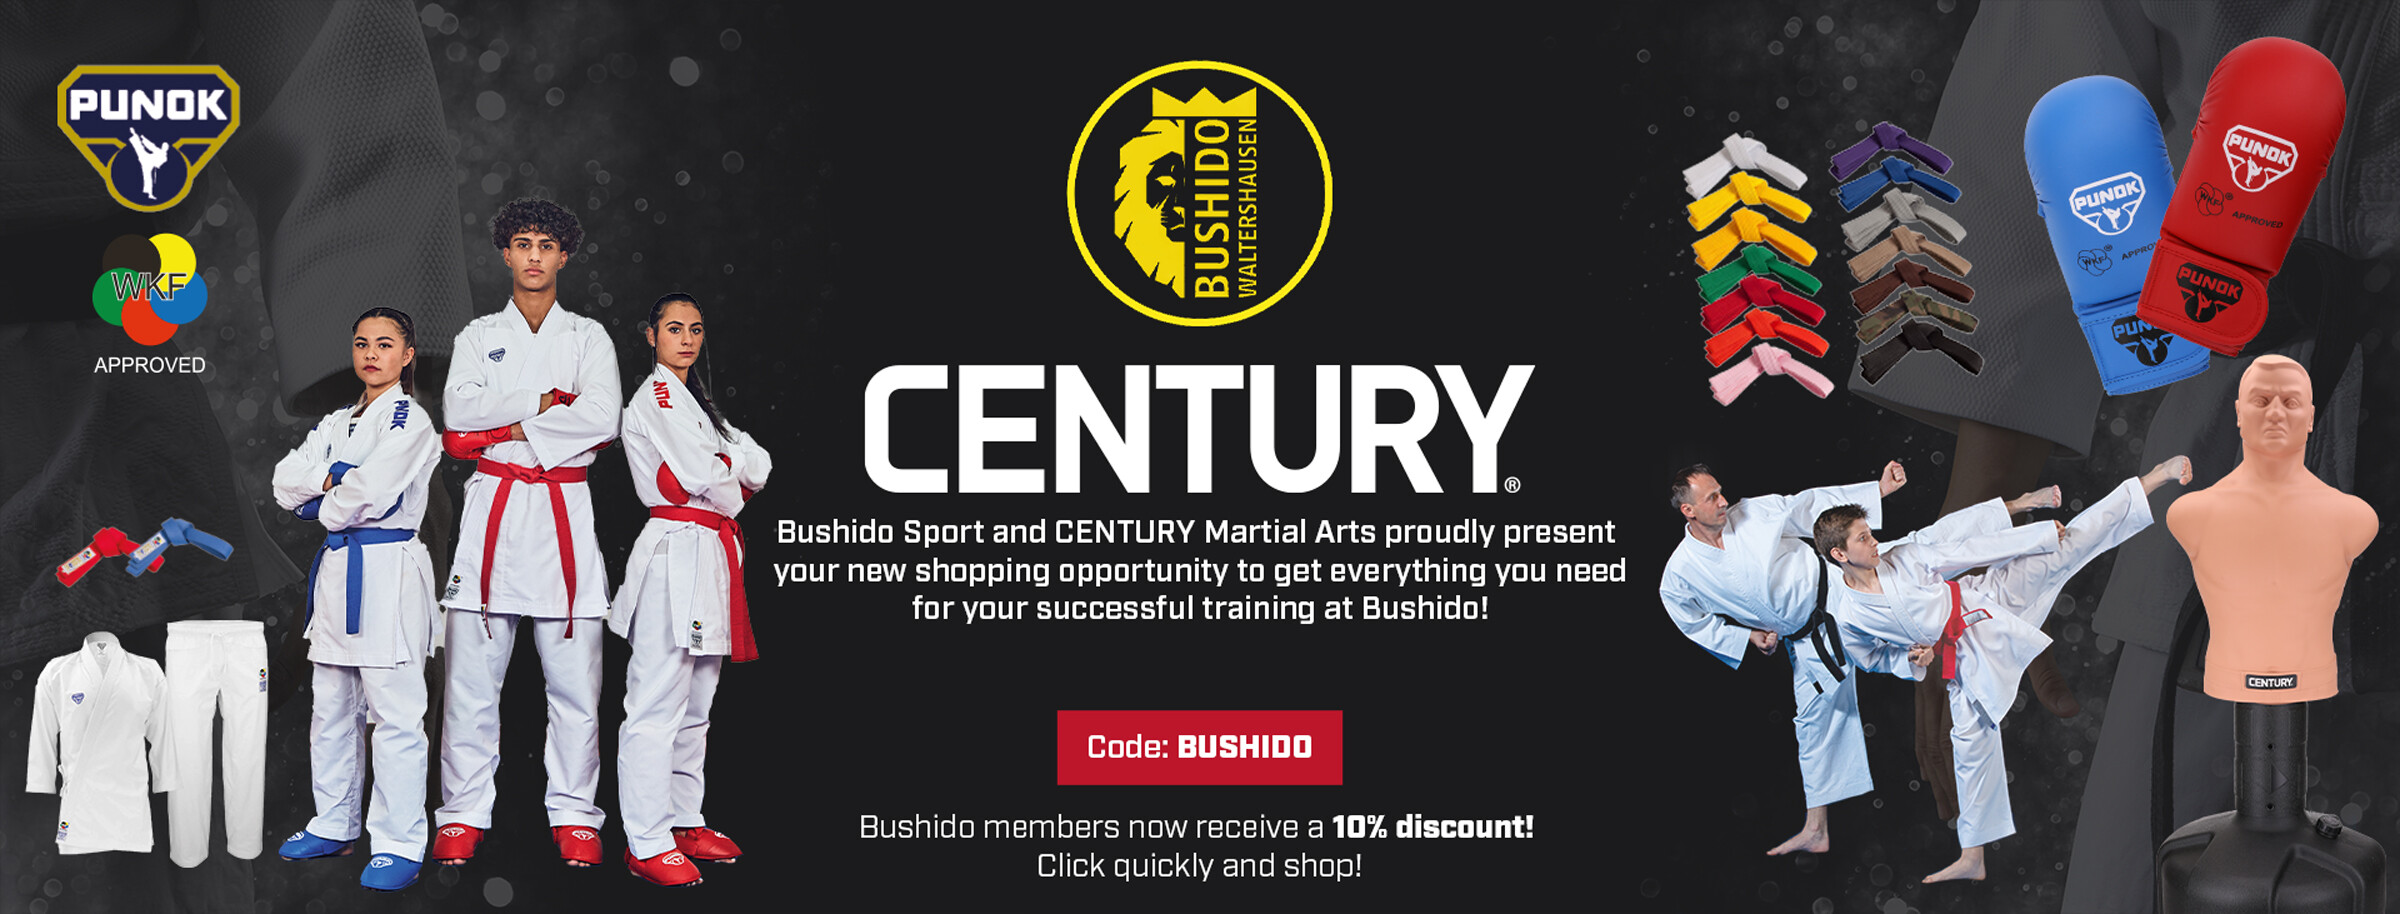 BUSHIDO-SPORT members receive a 10% discount